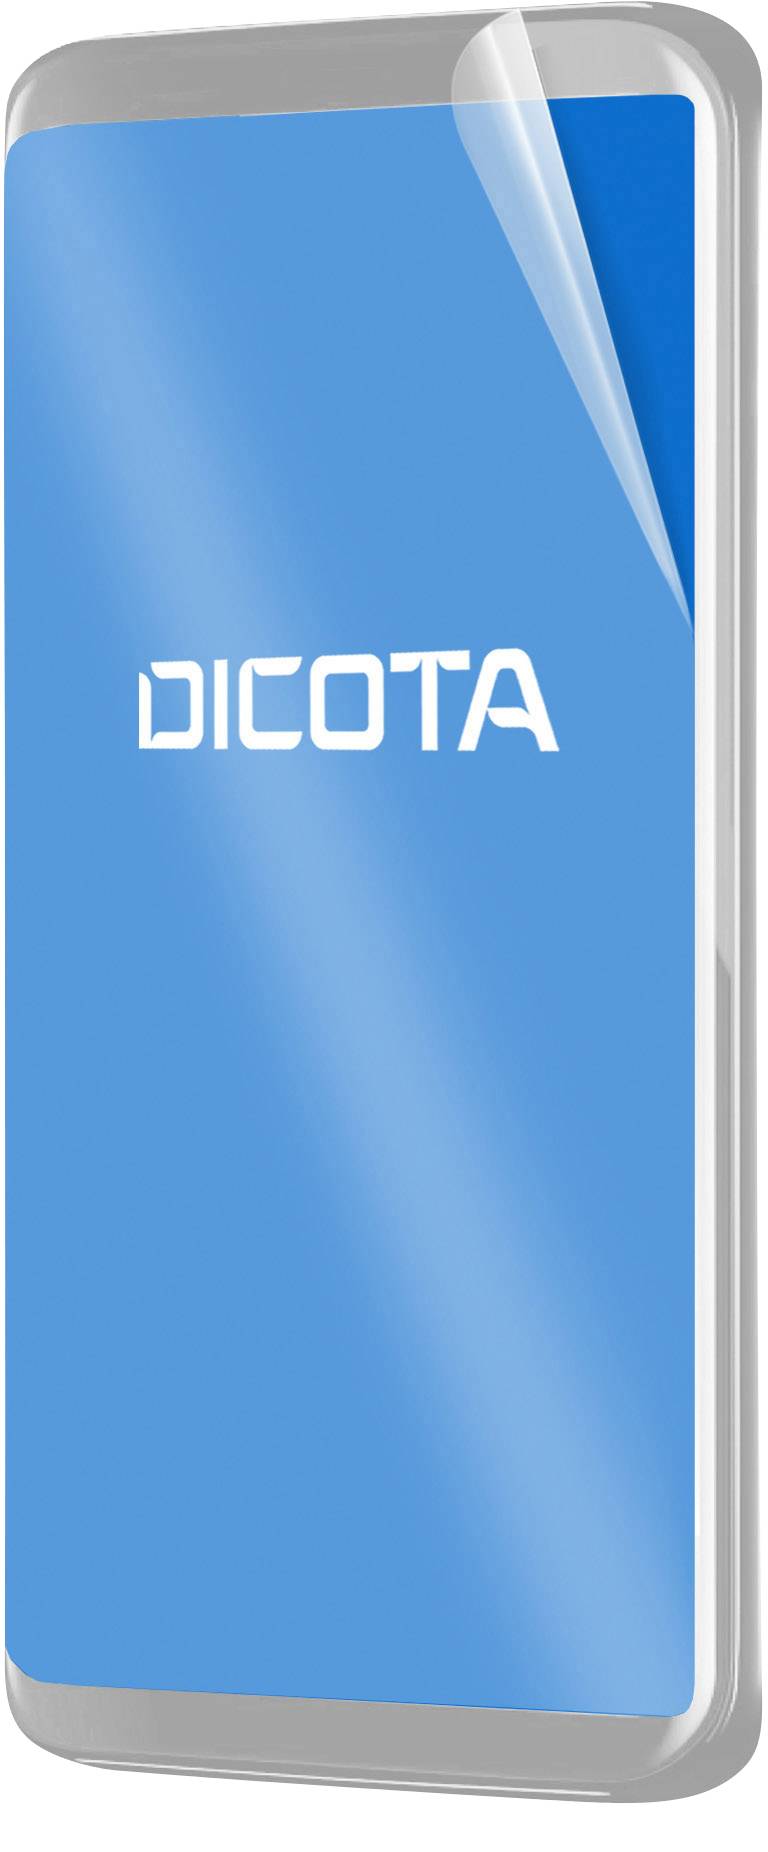 DICOTA Anti-glare filter 9H for iPhone 11, self-adhesive transparent